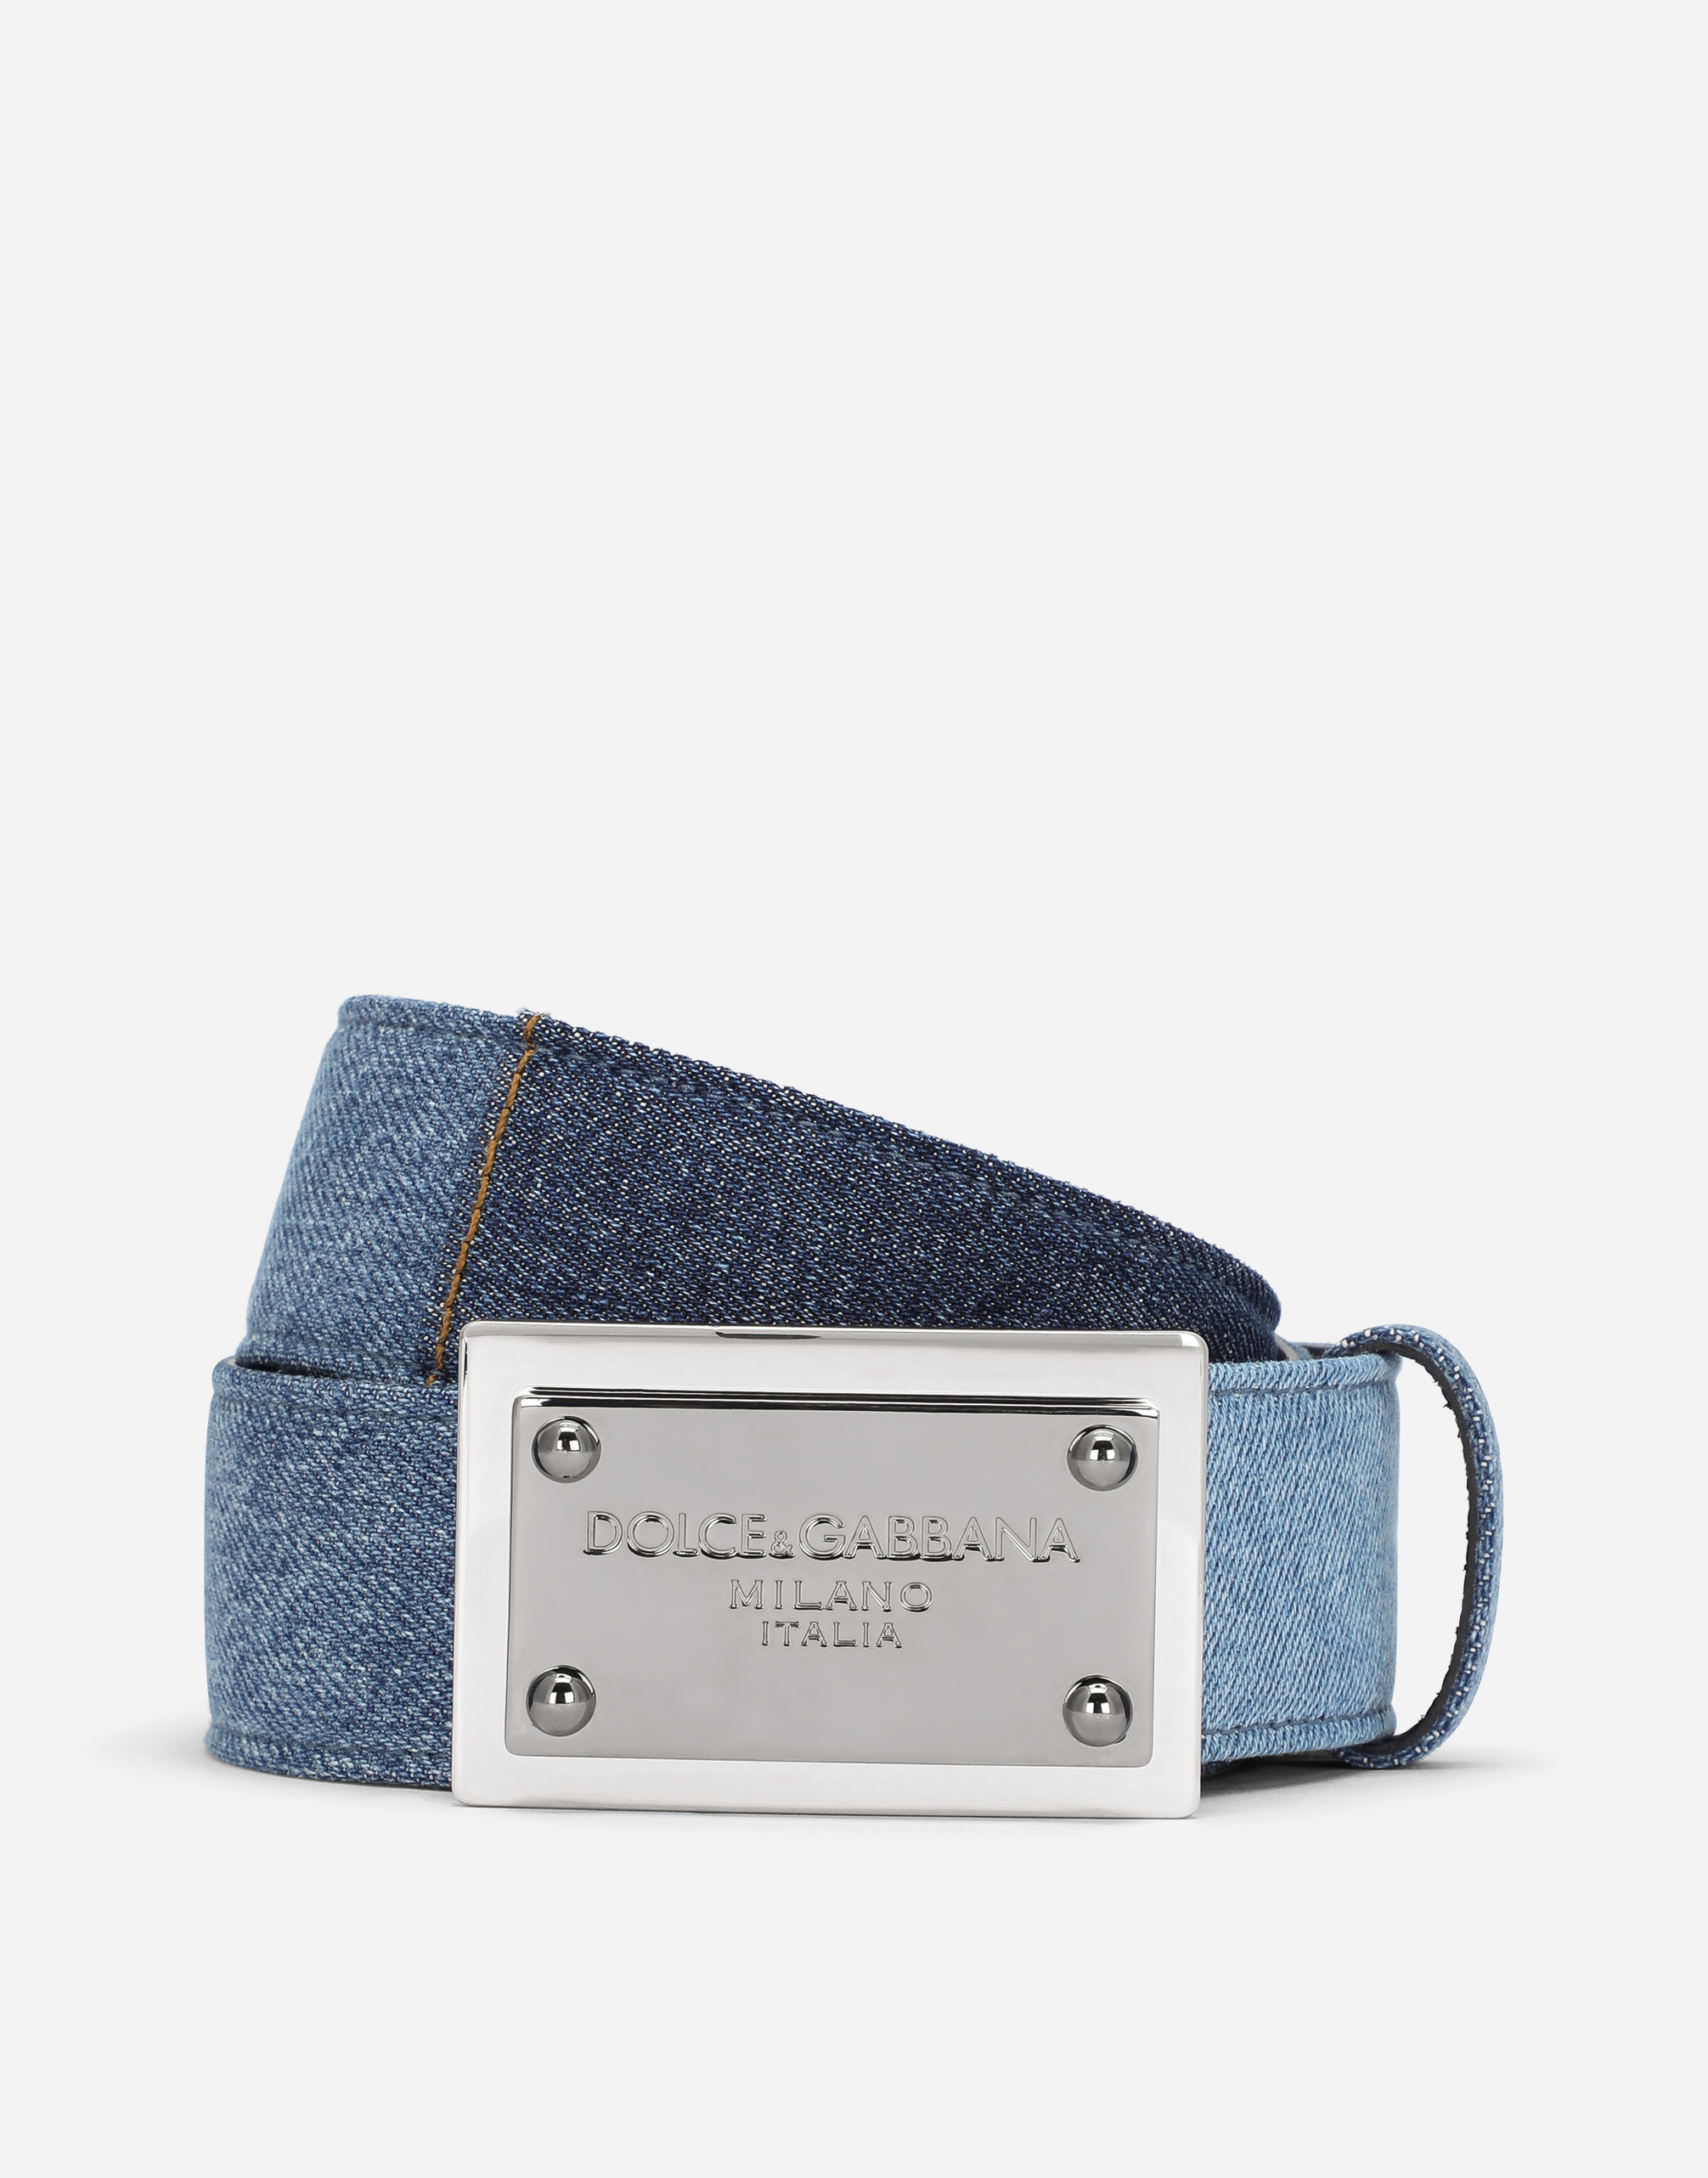 Patchwork denim belt with logo tag